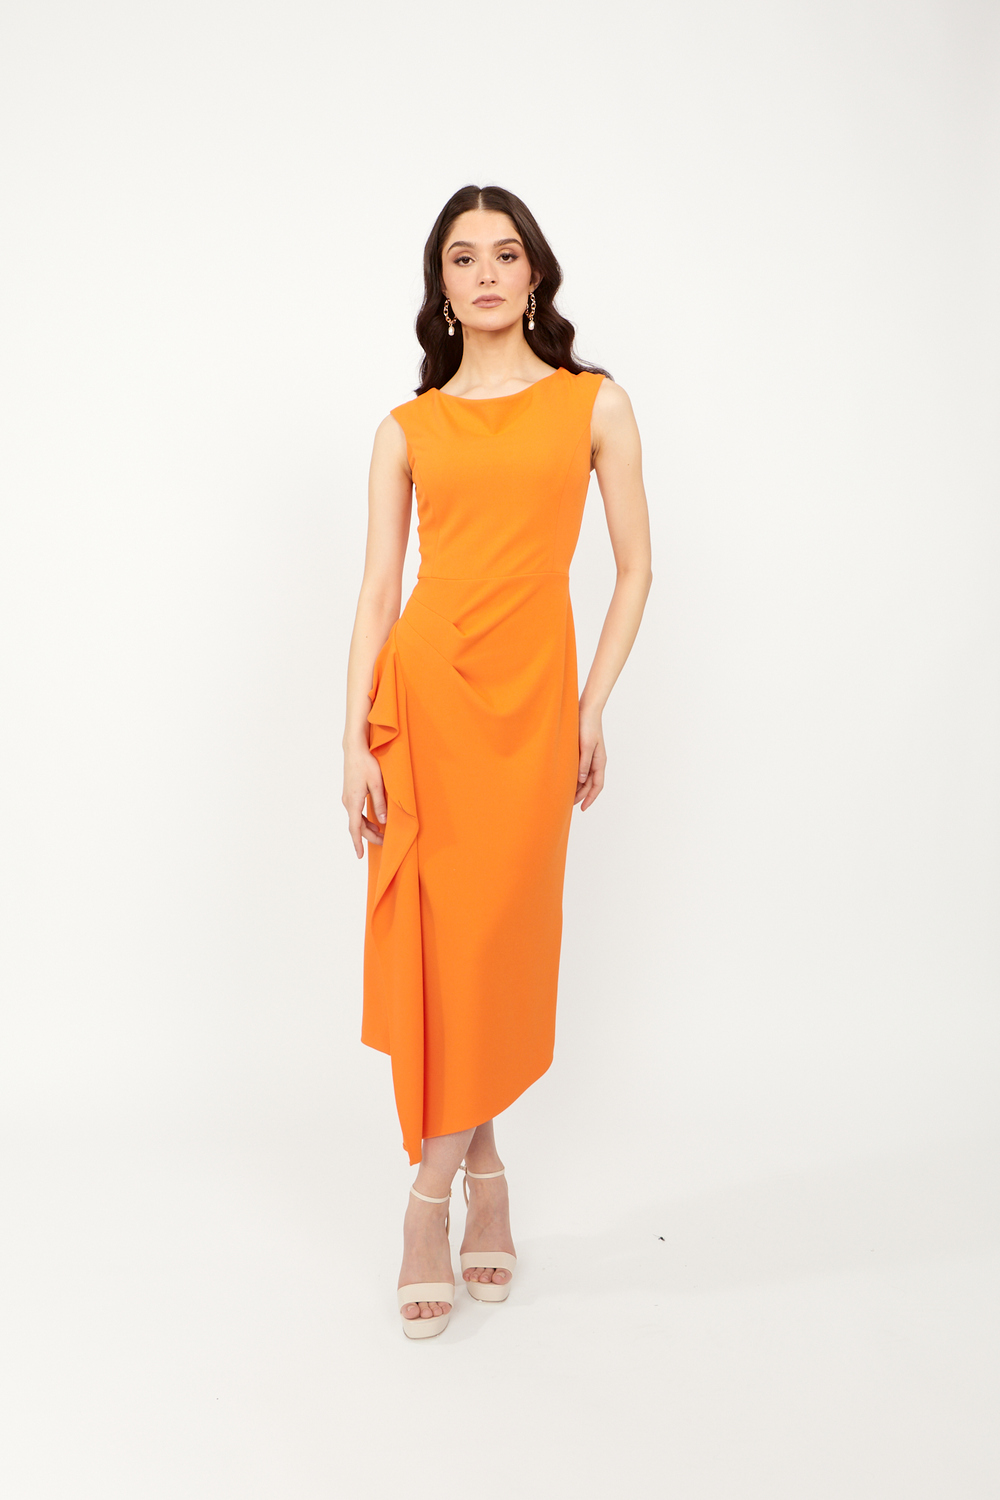 Ruffle Sheath Dress Style 242238. Mandarin